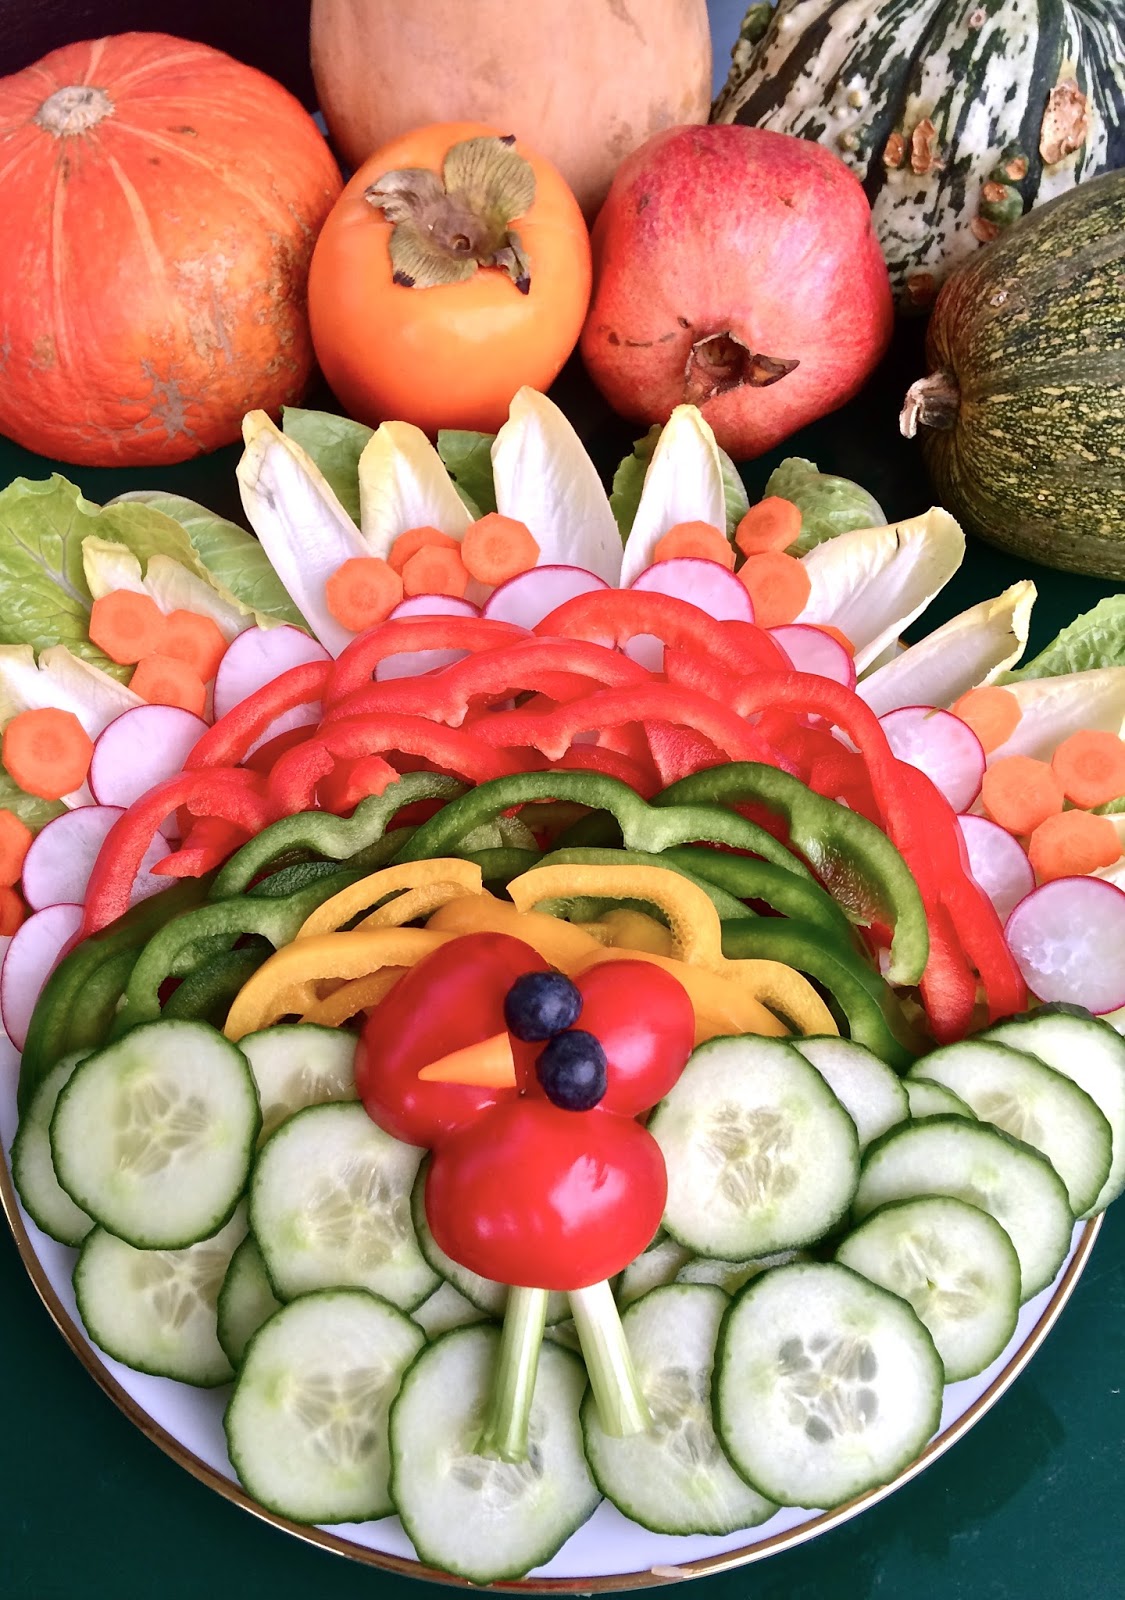 Passionately Raw! : Raw Vegan Thanksgiving "Turkey"